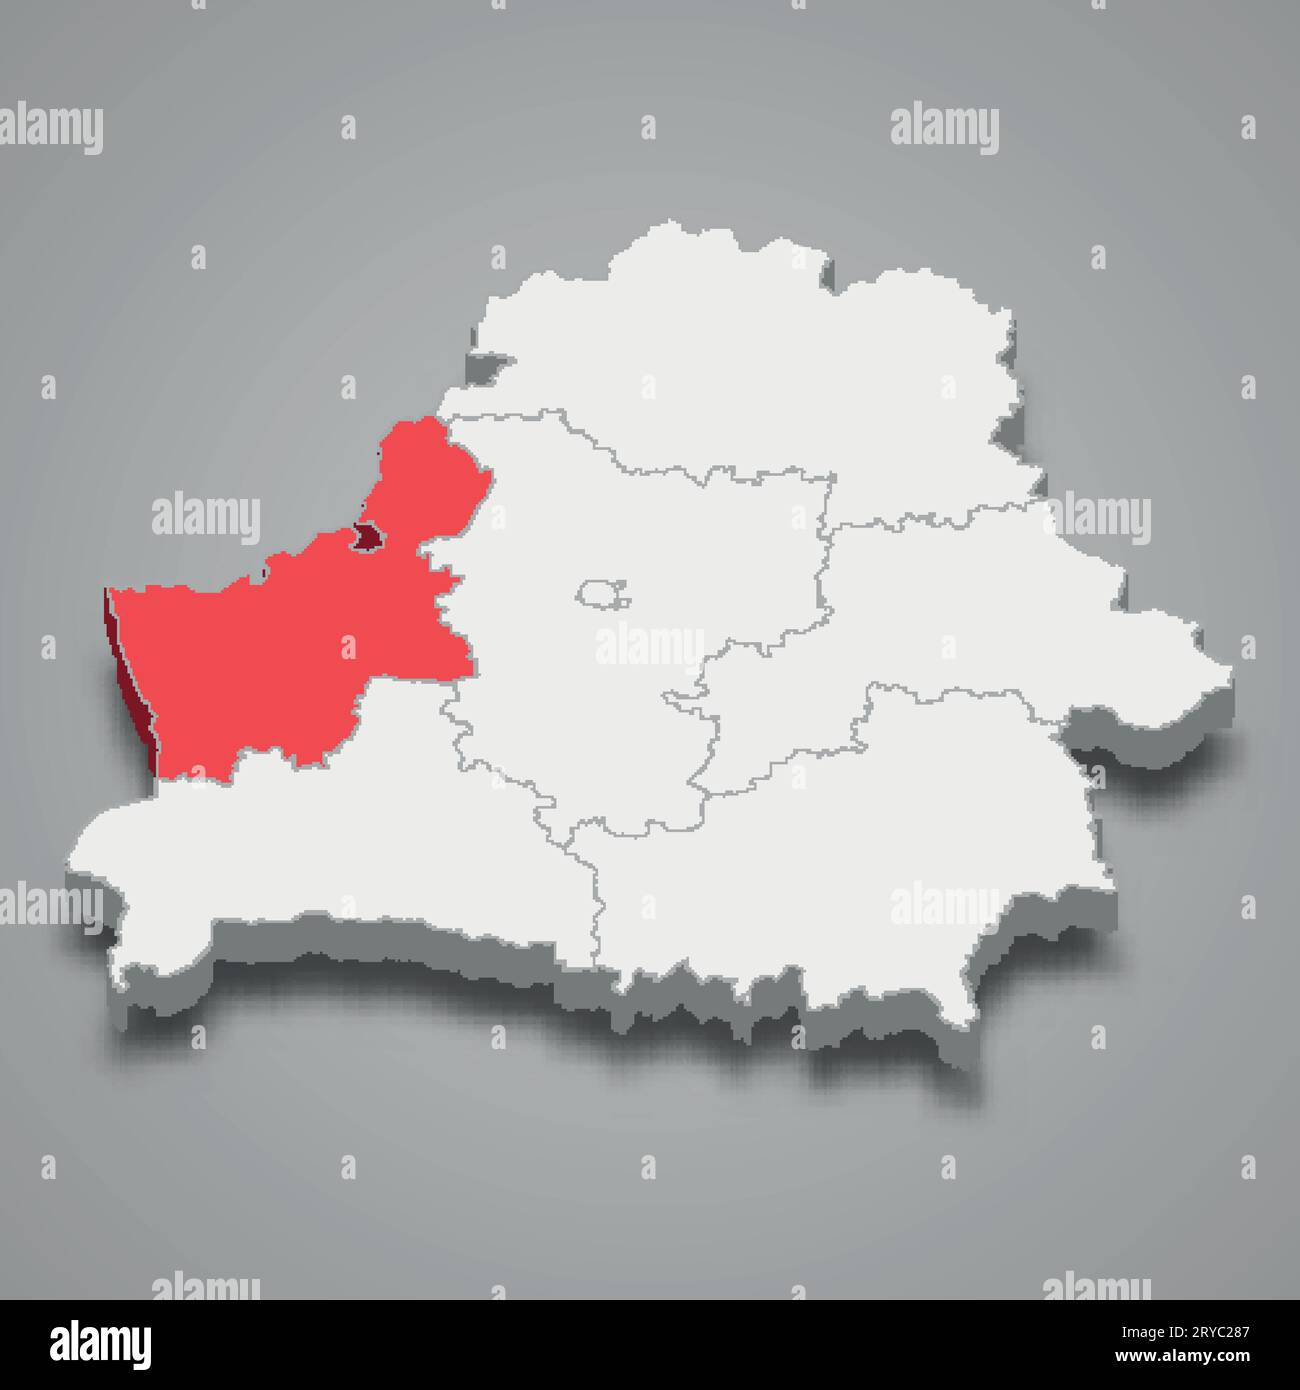 Grodno oblast region location within Belarus 3d isometric map Stock Vector